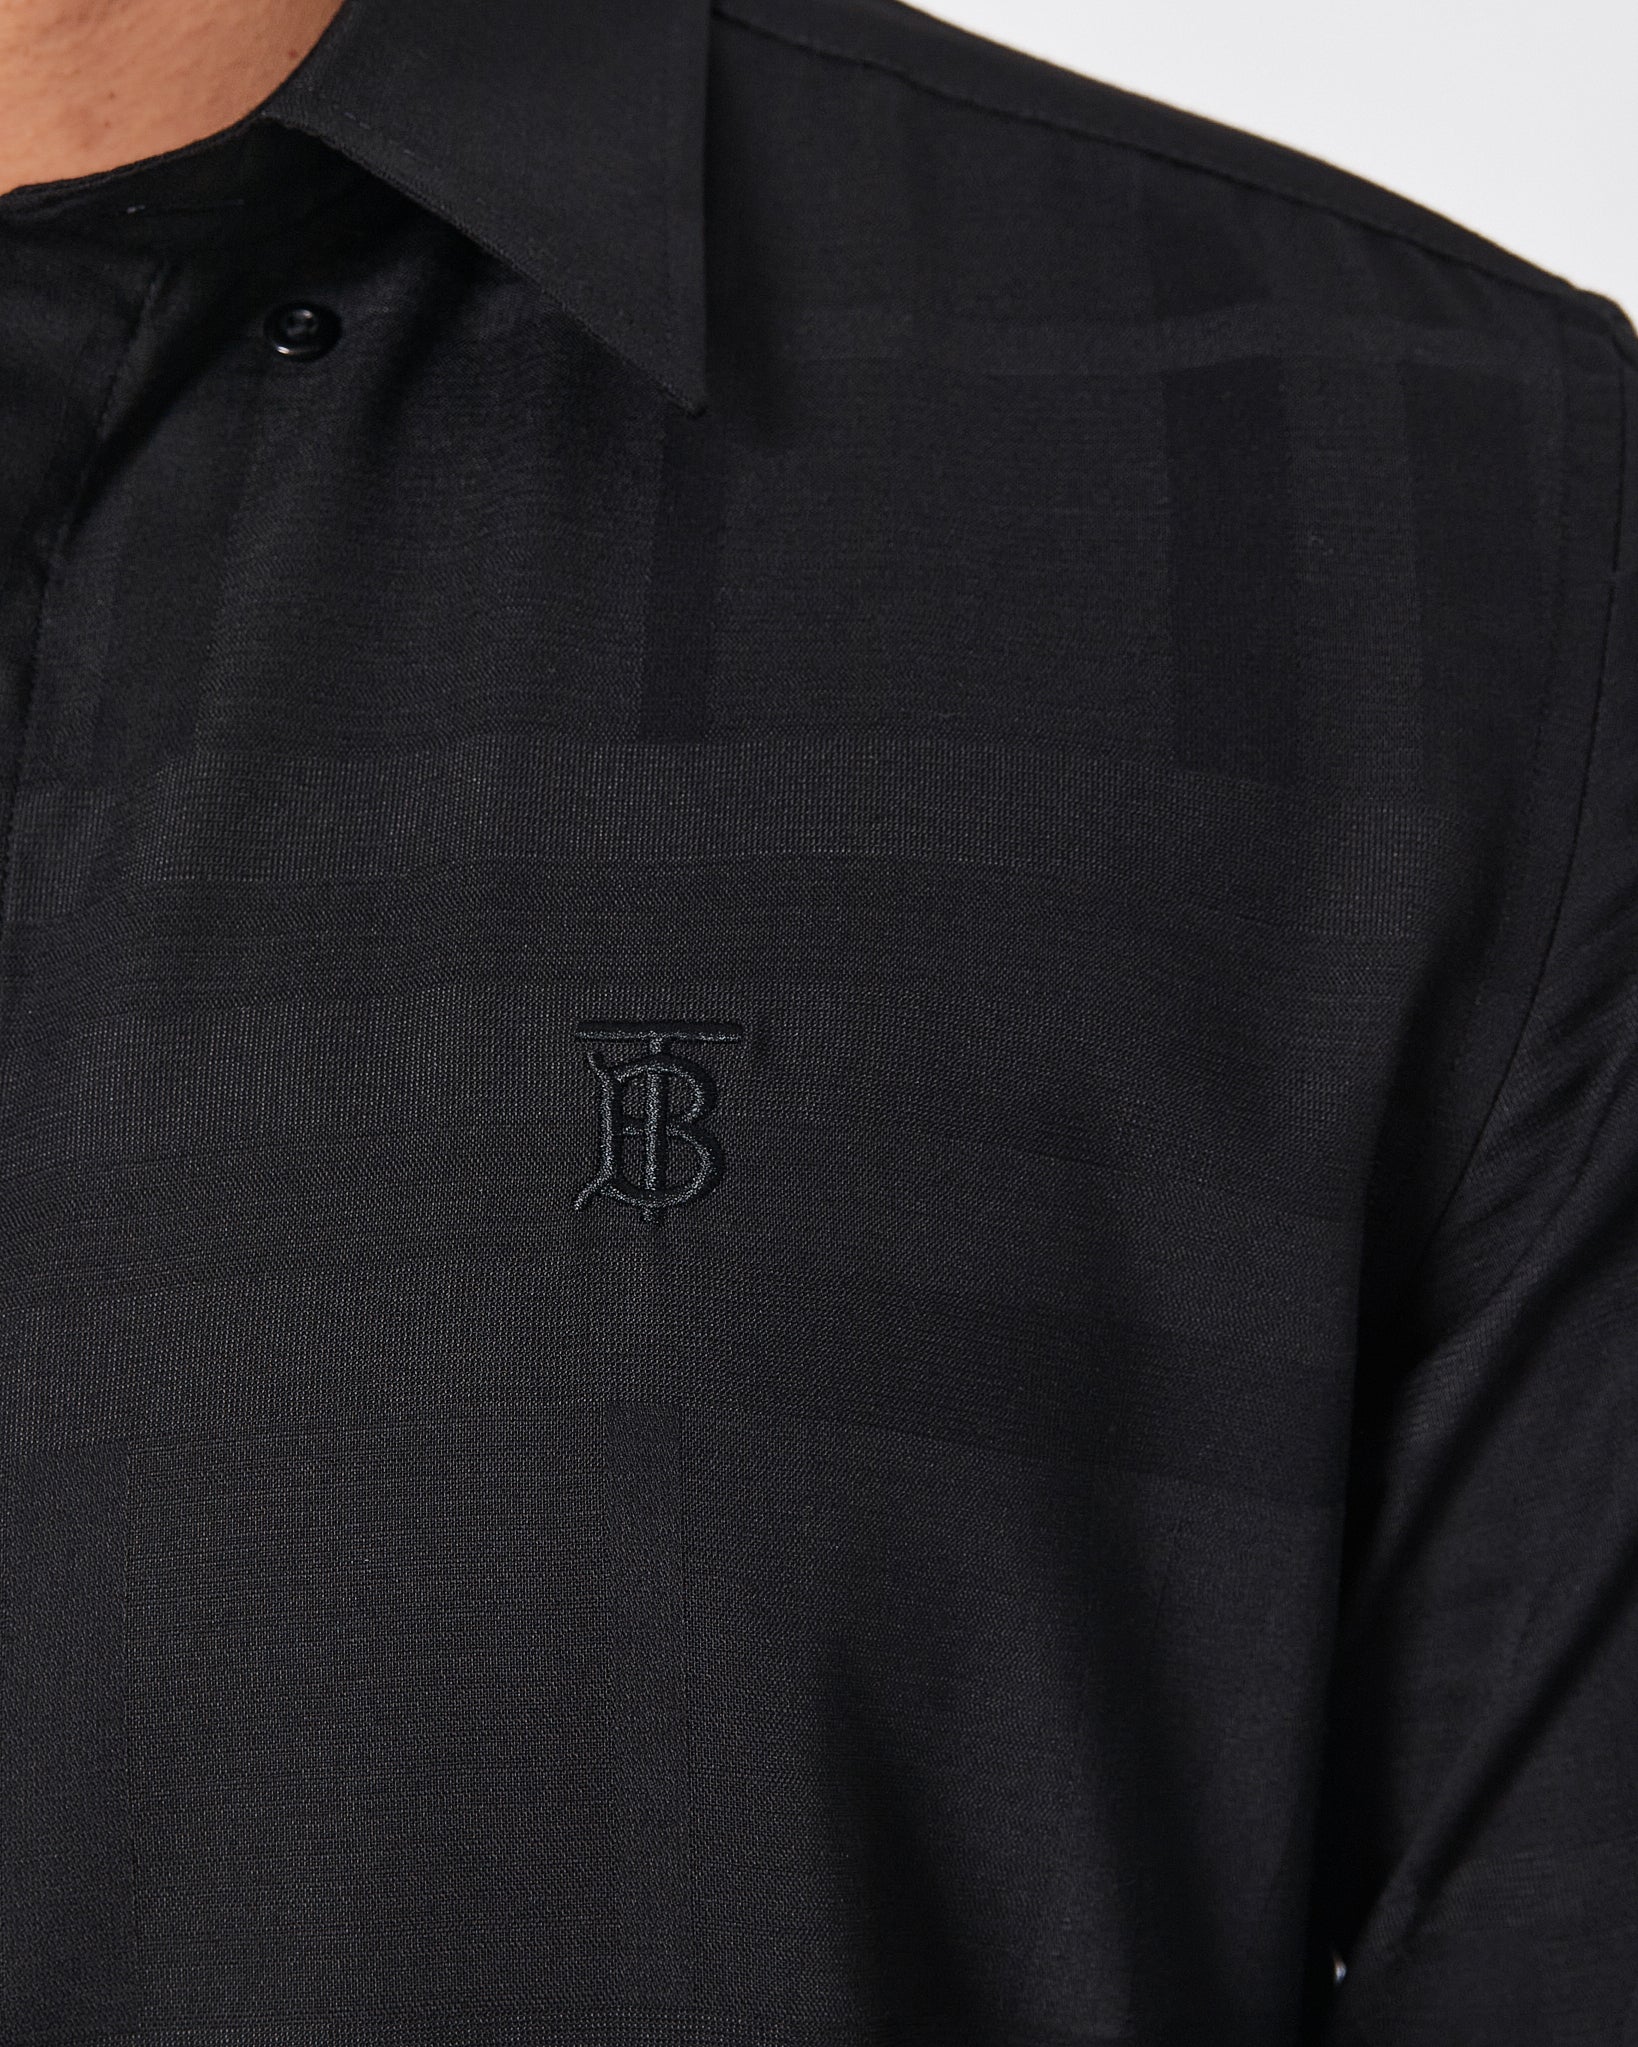 BUR Logo Embroidered Striped Men Black Shirts Long Sleeve 26.90